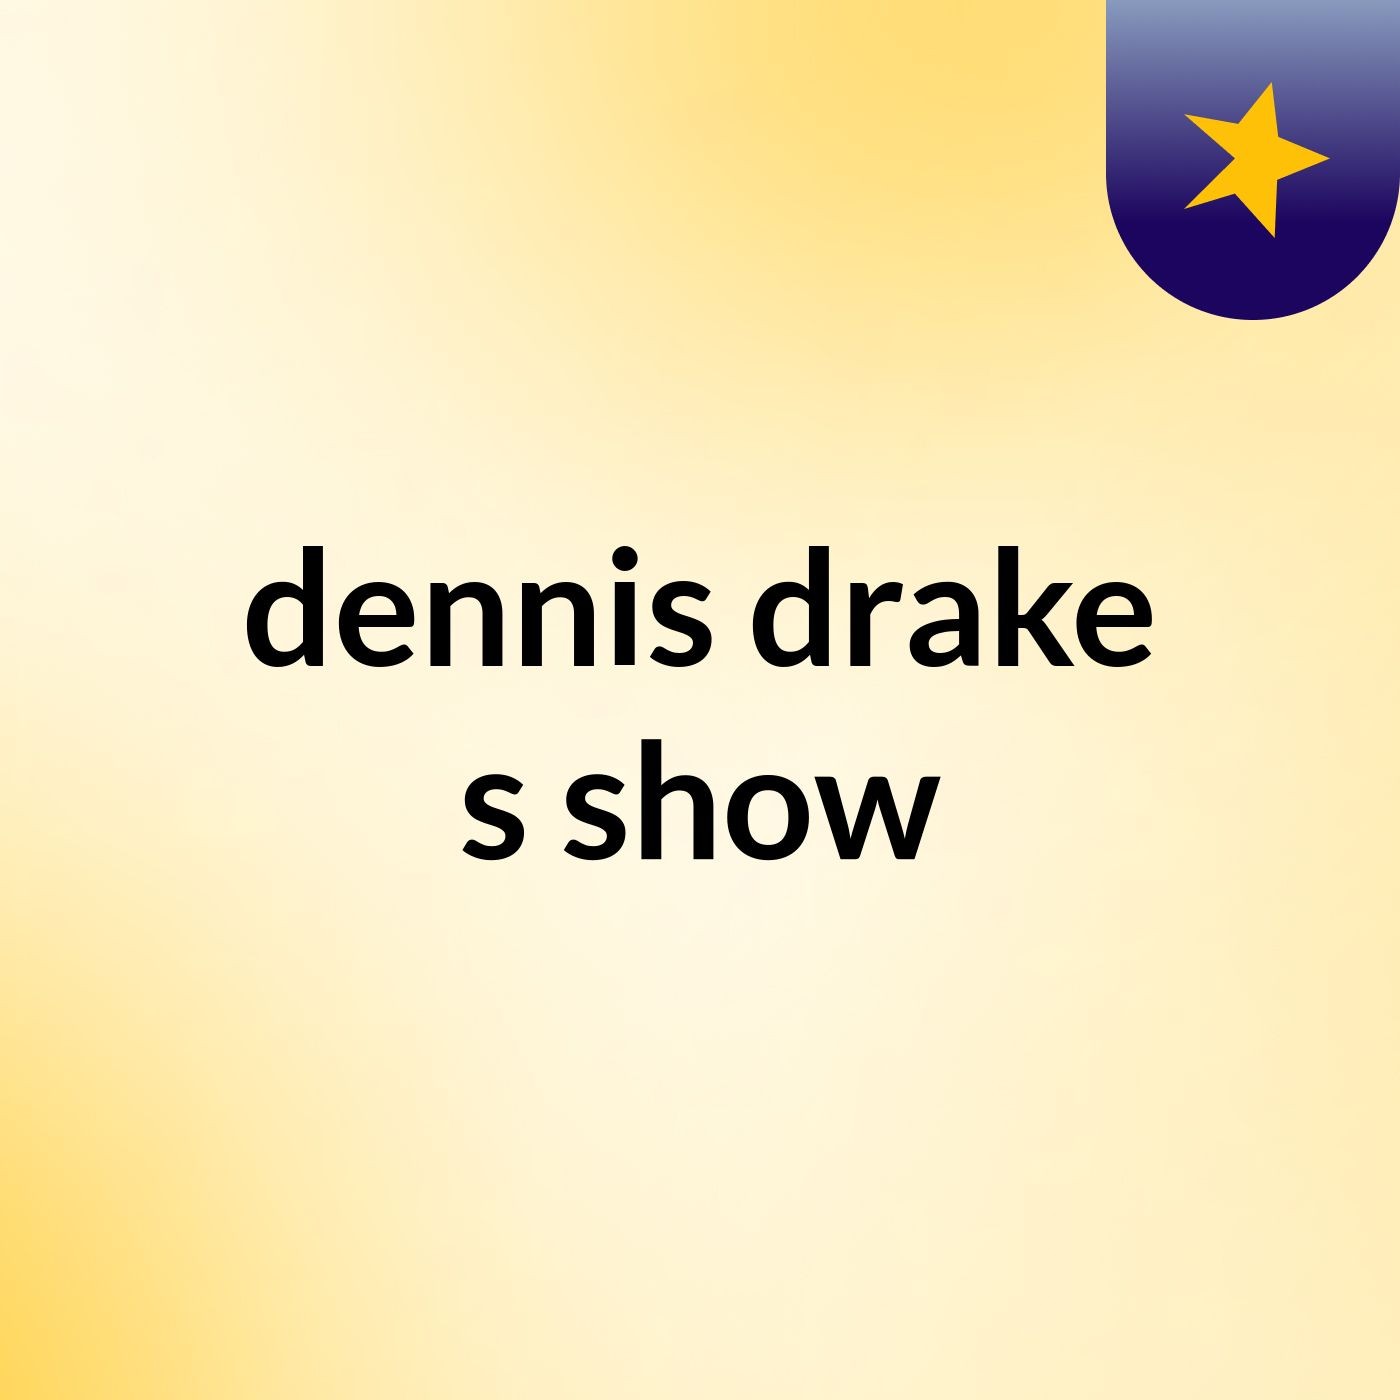 dennis drake's show